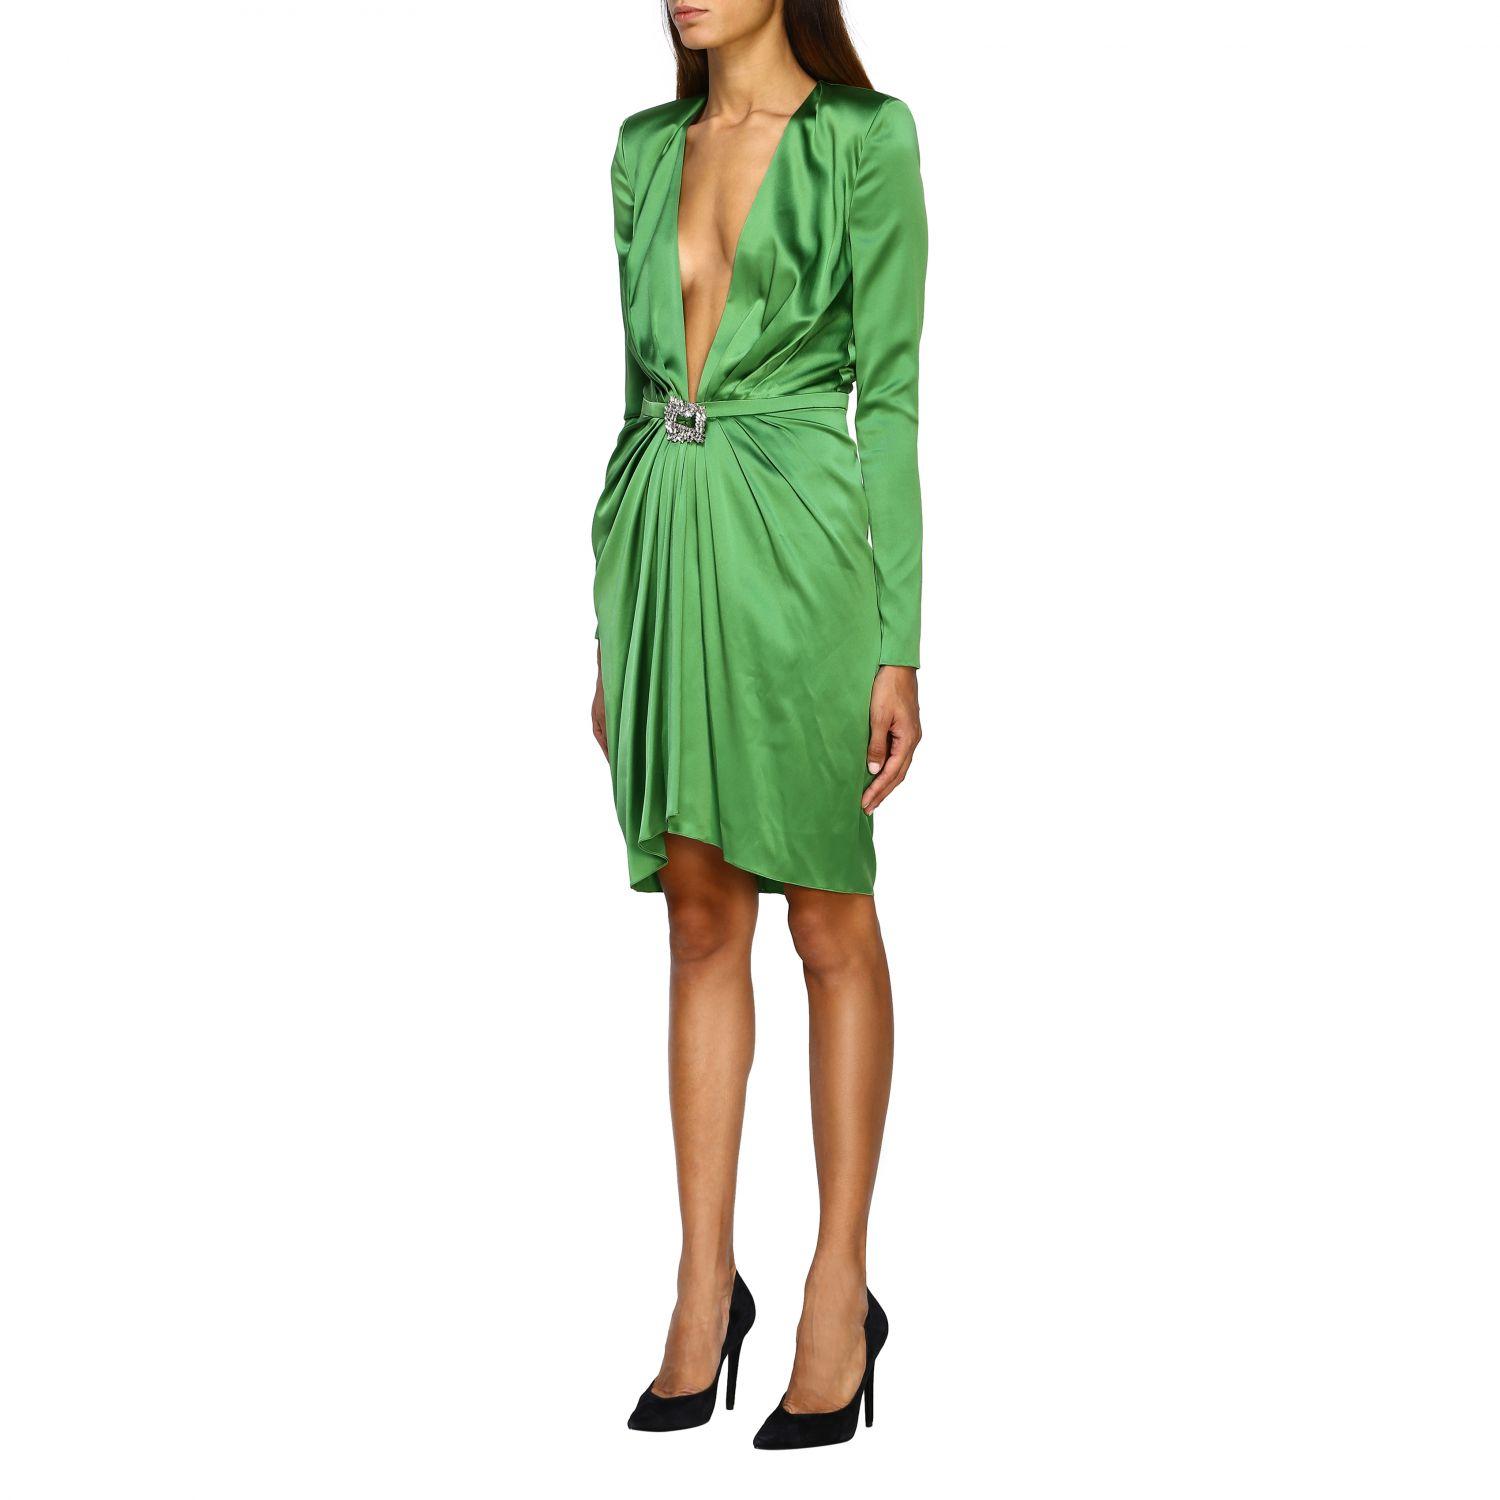 Alexandre Vauthier Women's Dress in Green - Lyst